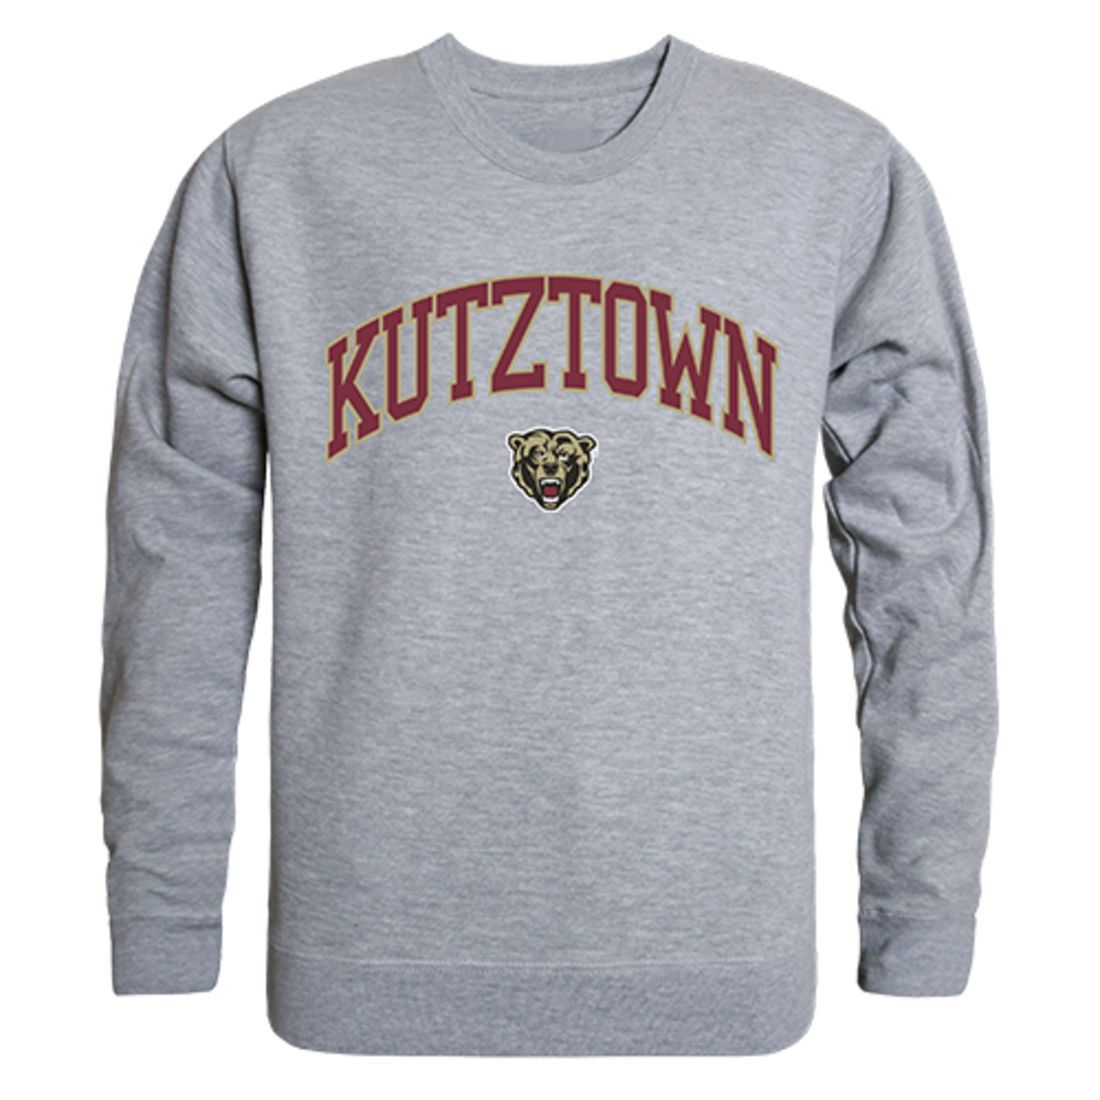 Kutztown University of Pennsylvania Campus Crewneck Pullover Sweatshirt Sweater Heather Grey-Campus-Wardrobe